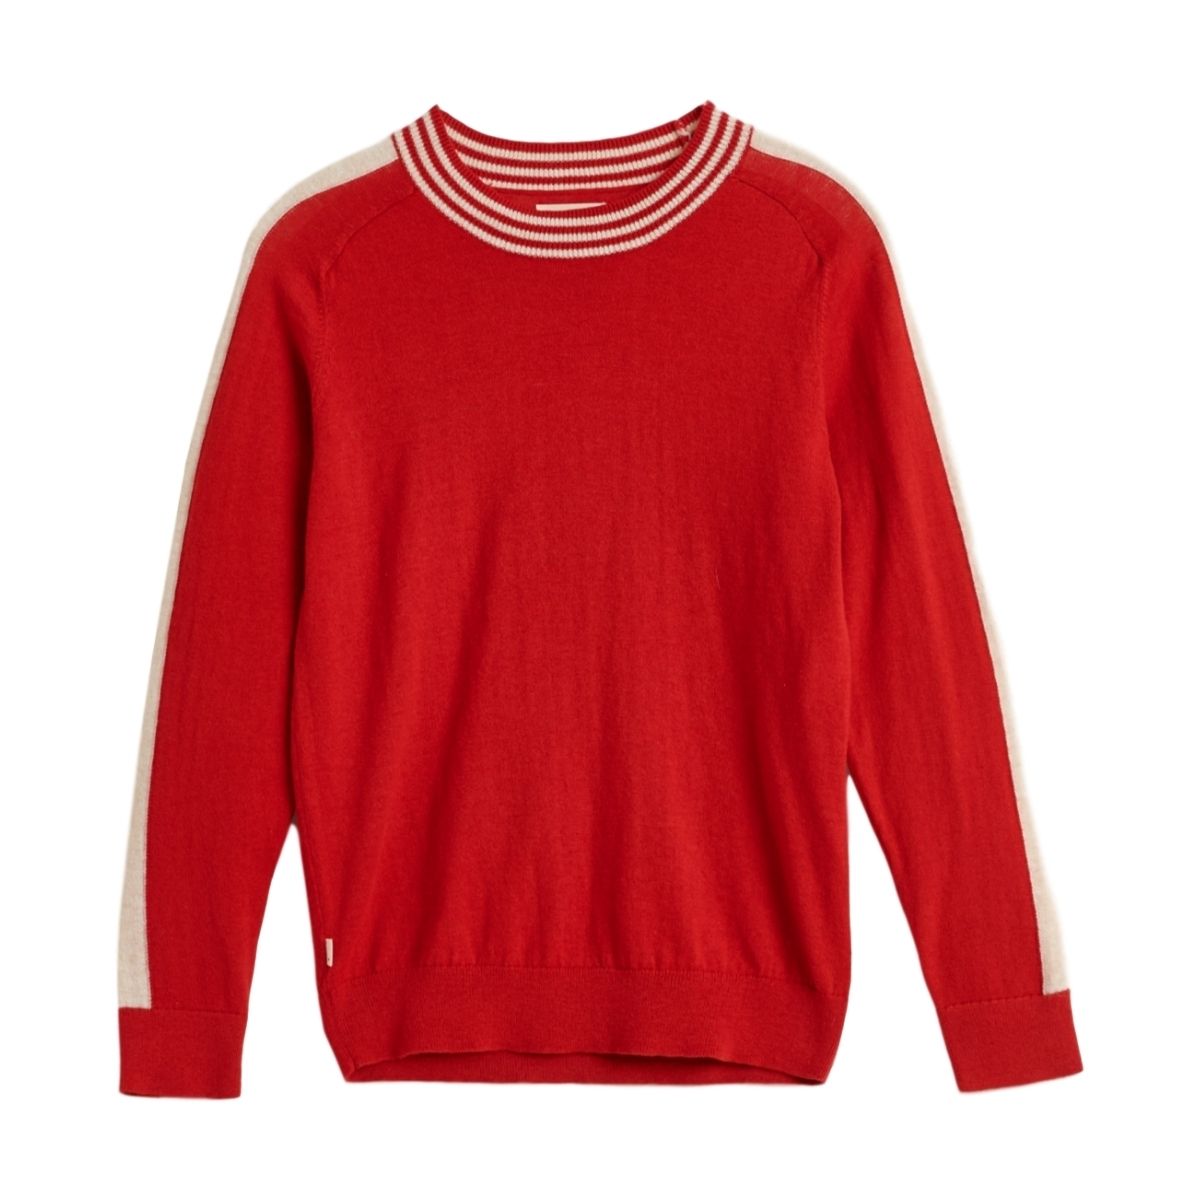 Bellerose - Sweater Goone red - Sweaters - BK192960 K1008F 